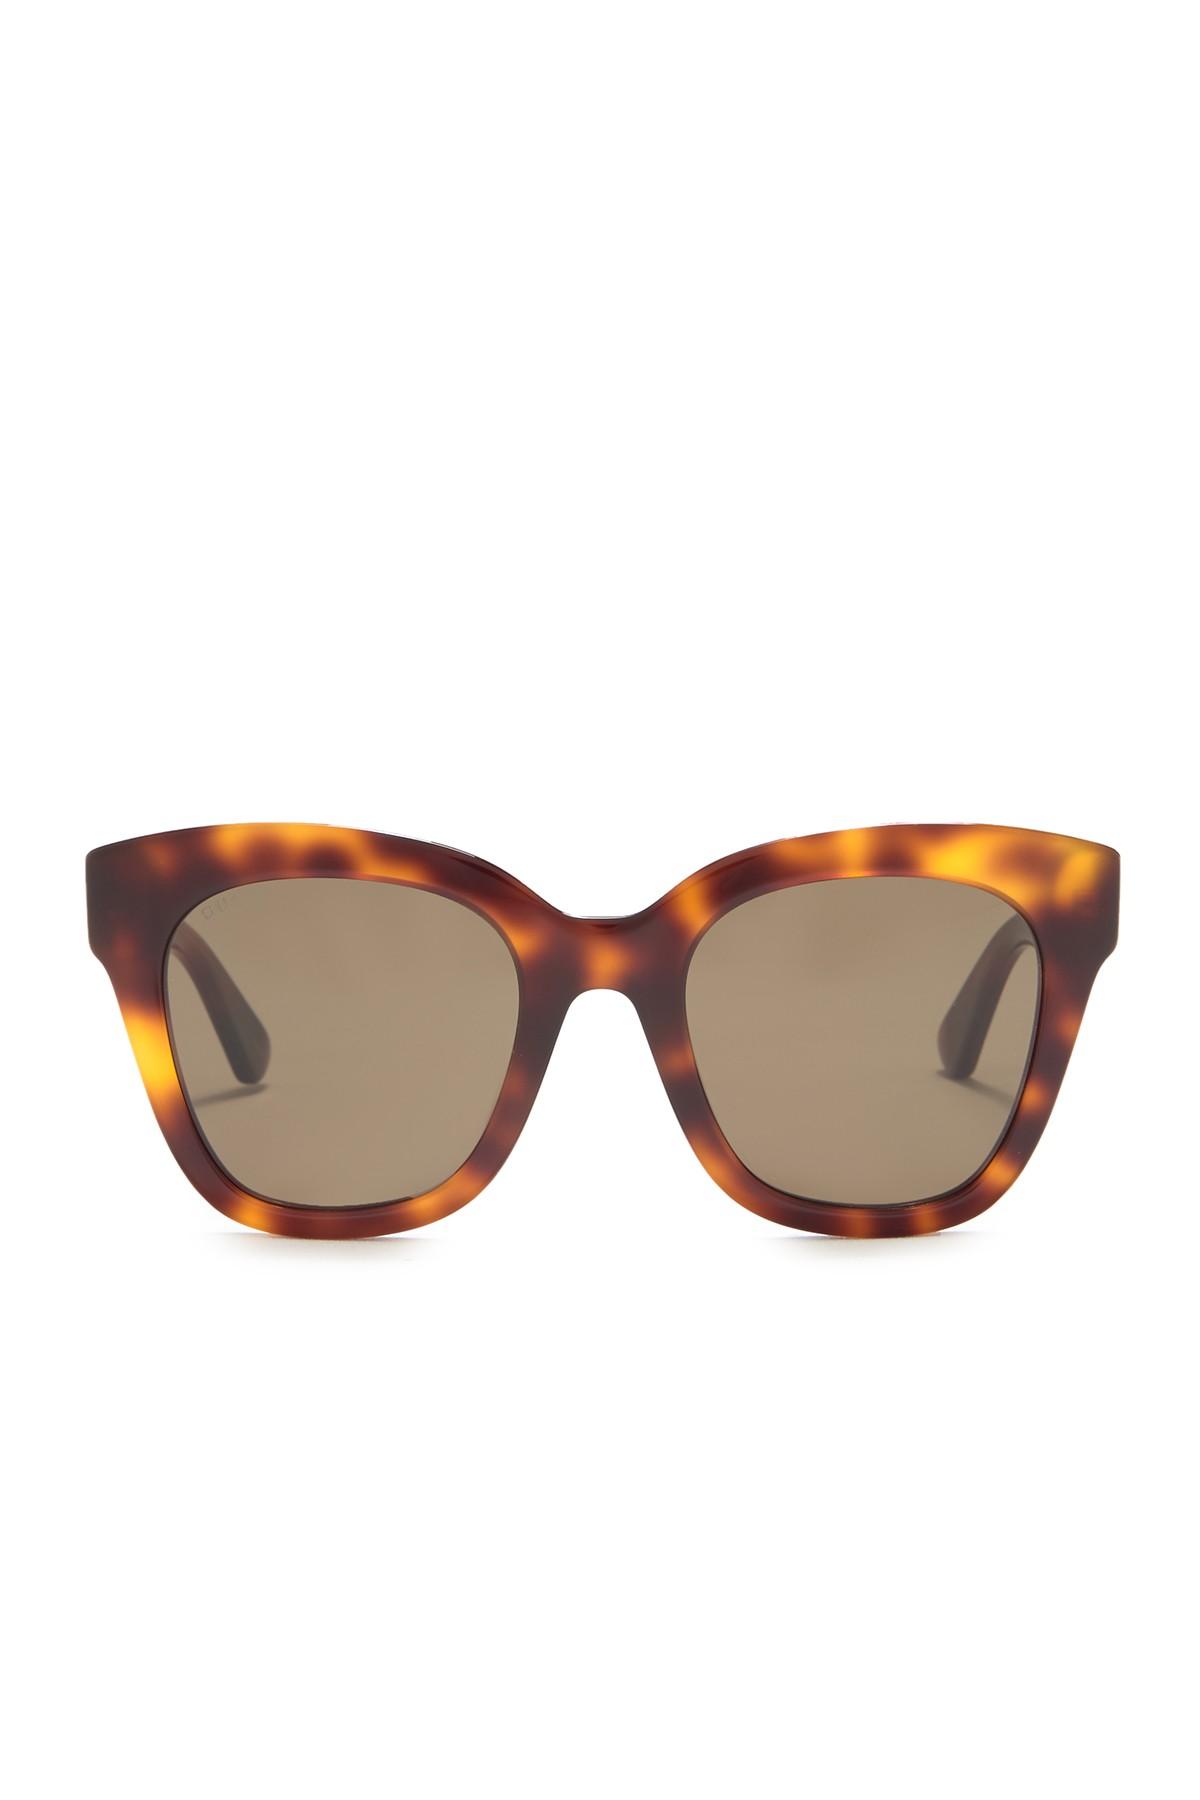 gucci square cat eye sunglasses